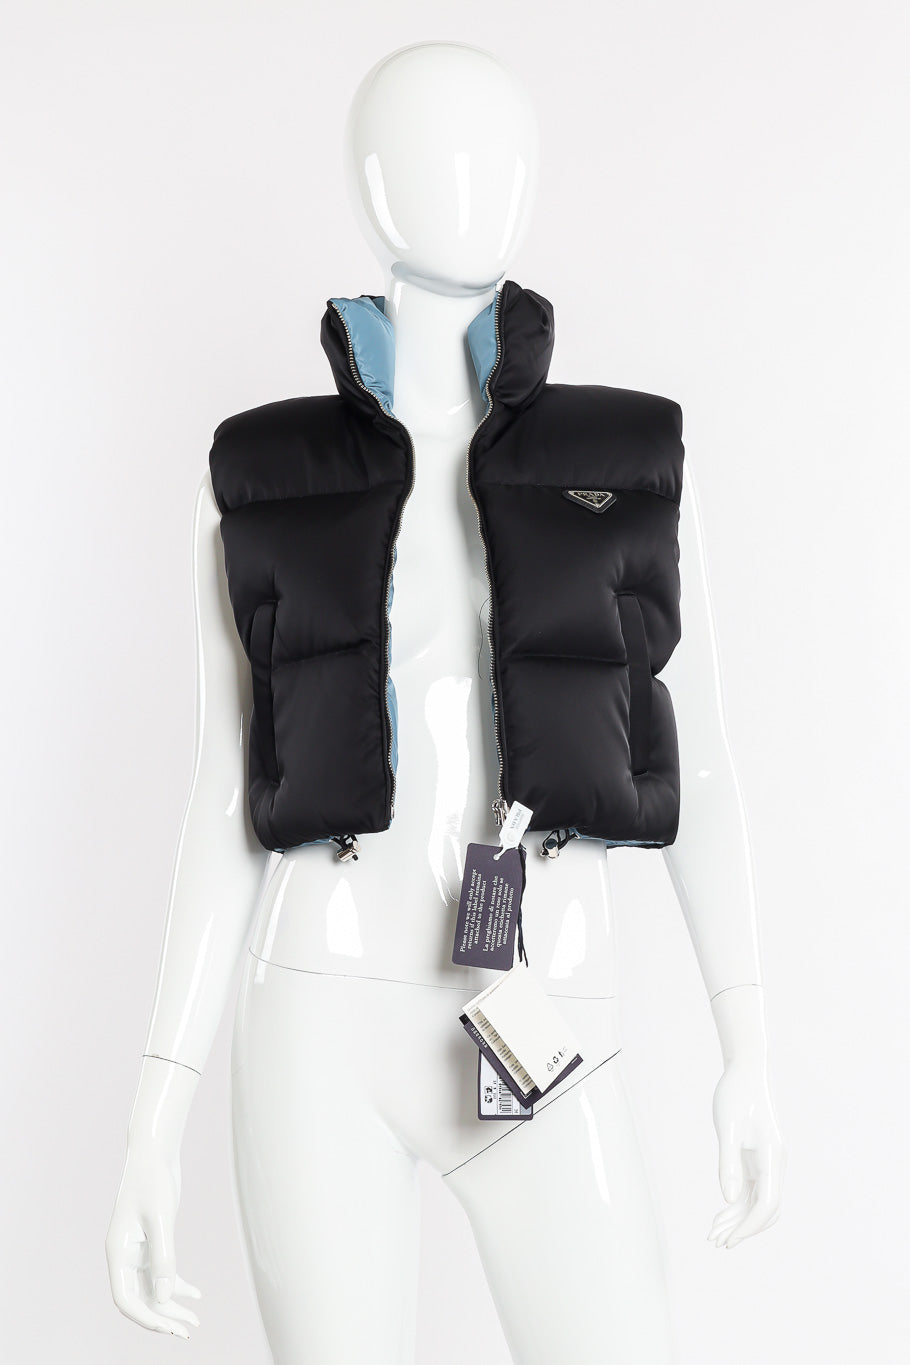 Prada Re-nylon Cropped Puffer Vest front view on mannequin @Recessla